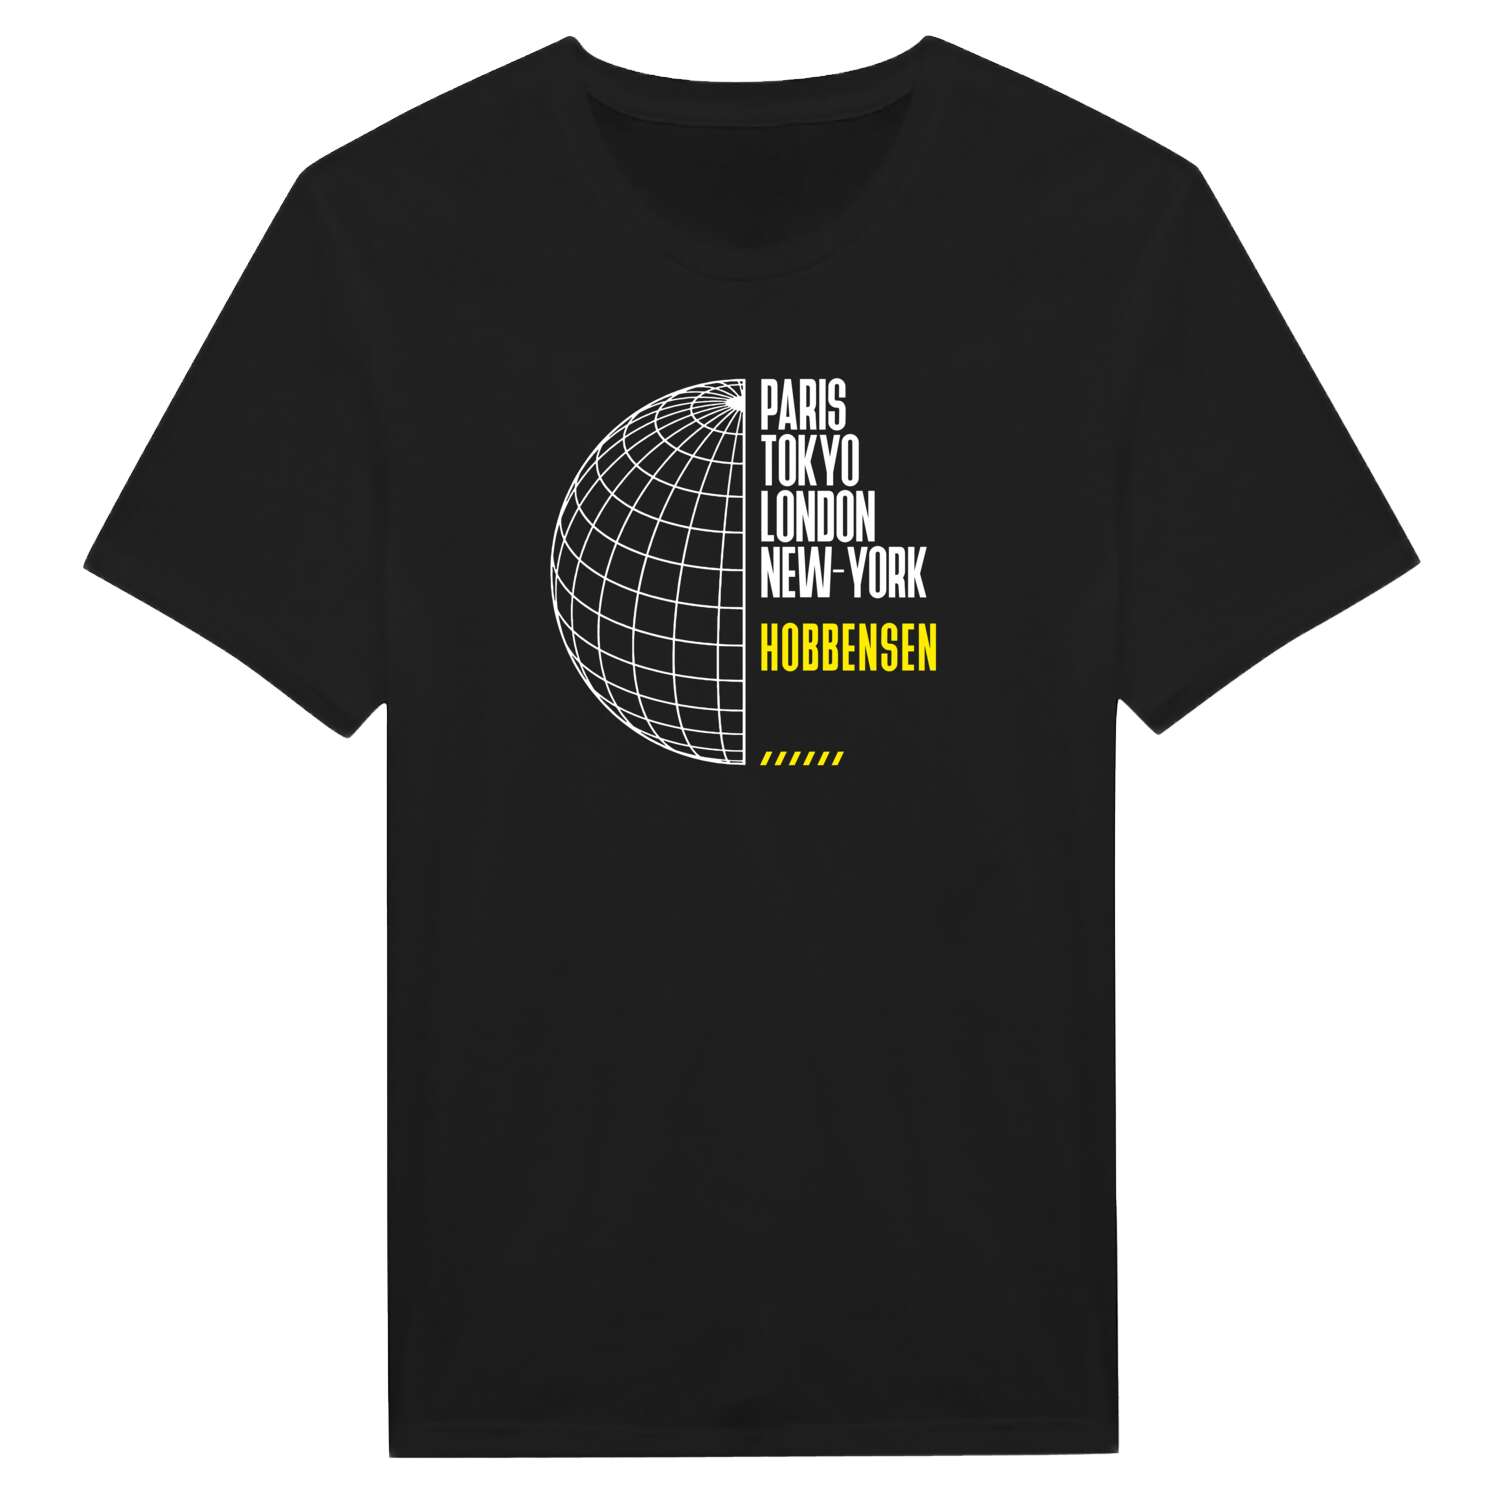 Hobbensen T-Shirt »Paris Tokyo London«